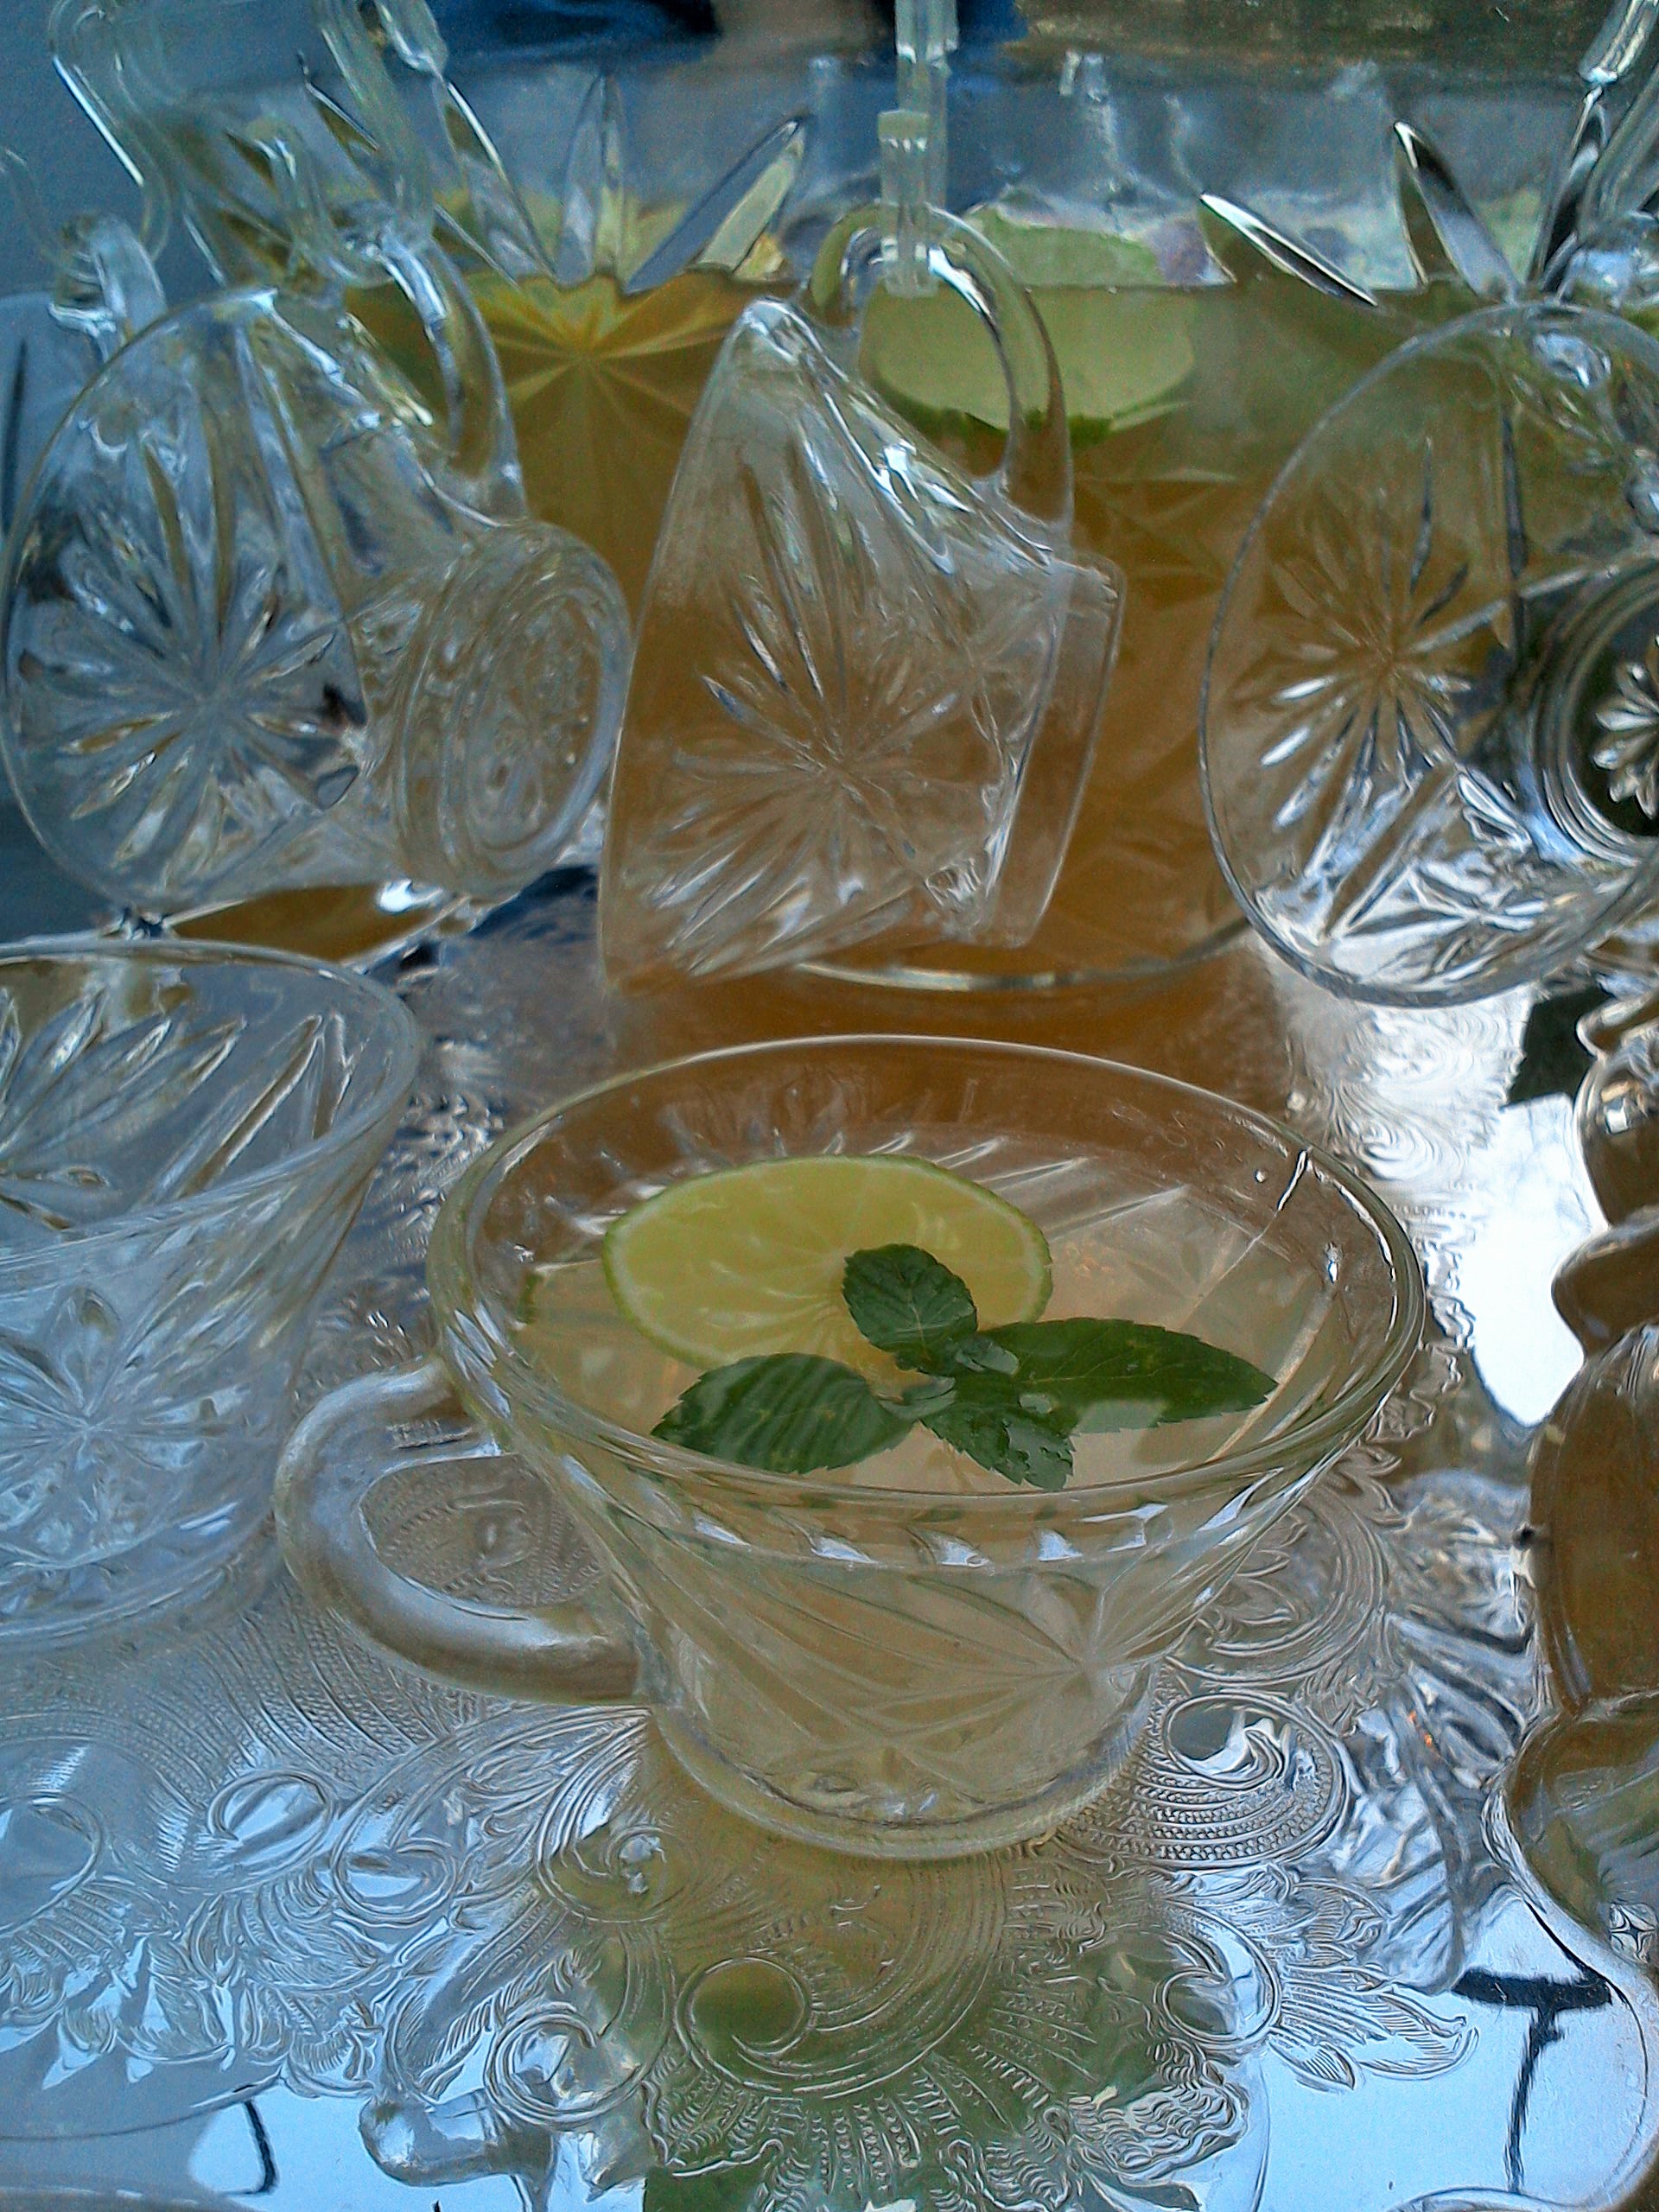 lemon lime champagne punch bowl recipe from MartieDuncan.com